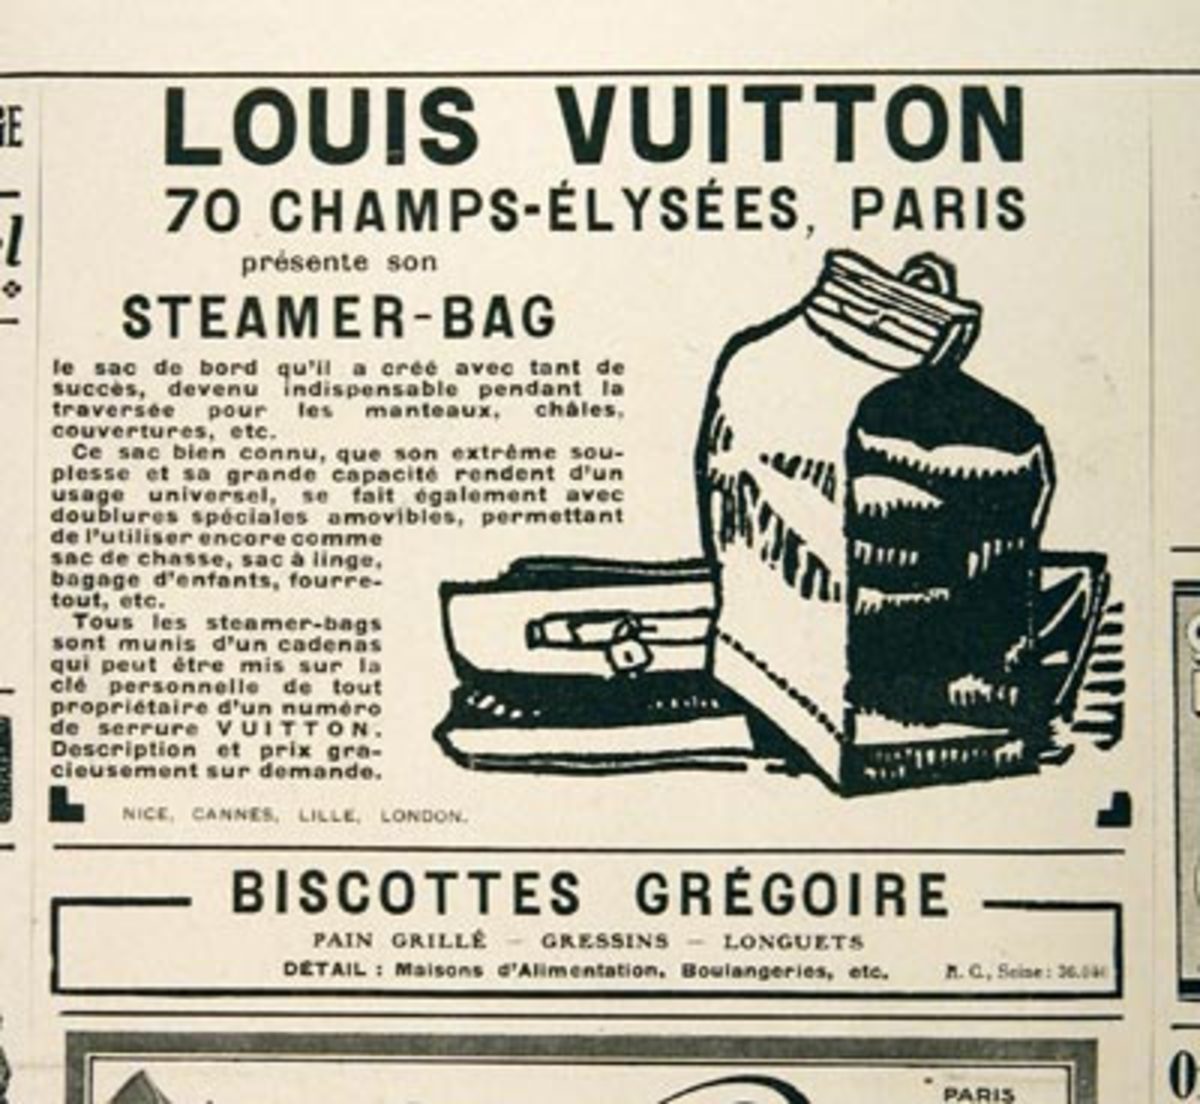 Best Louis Vuitton Ads